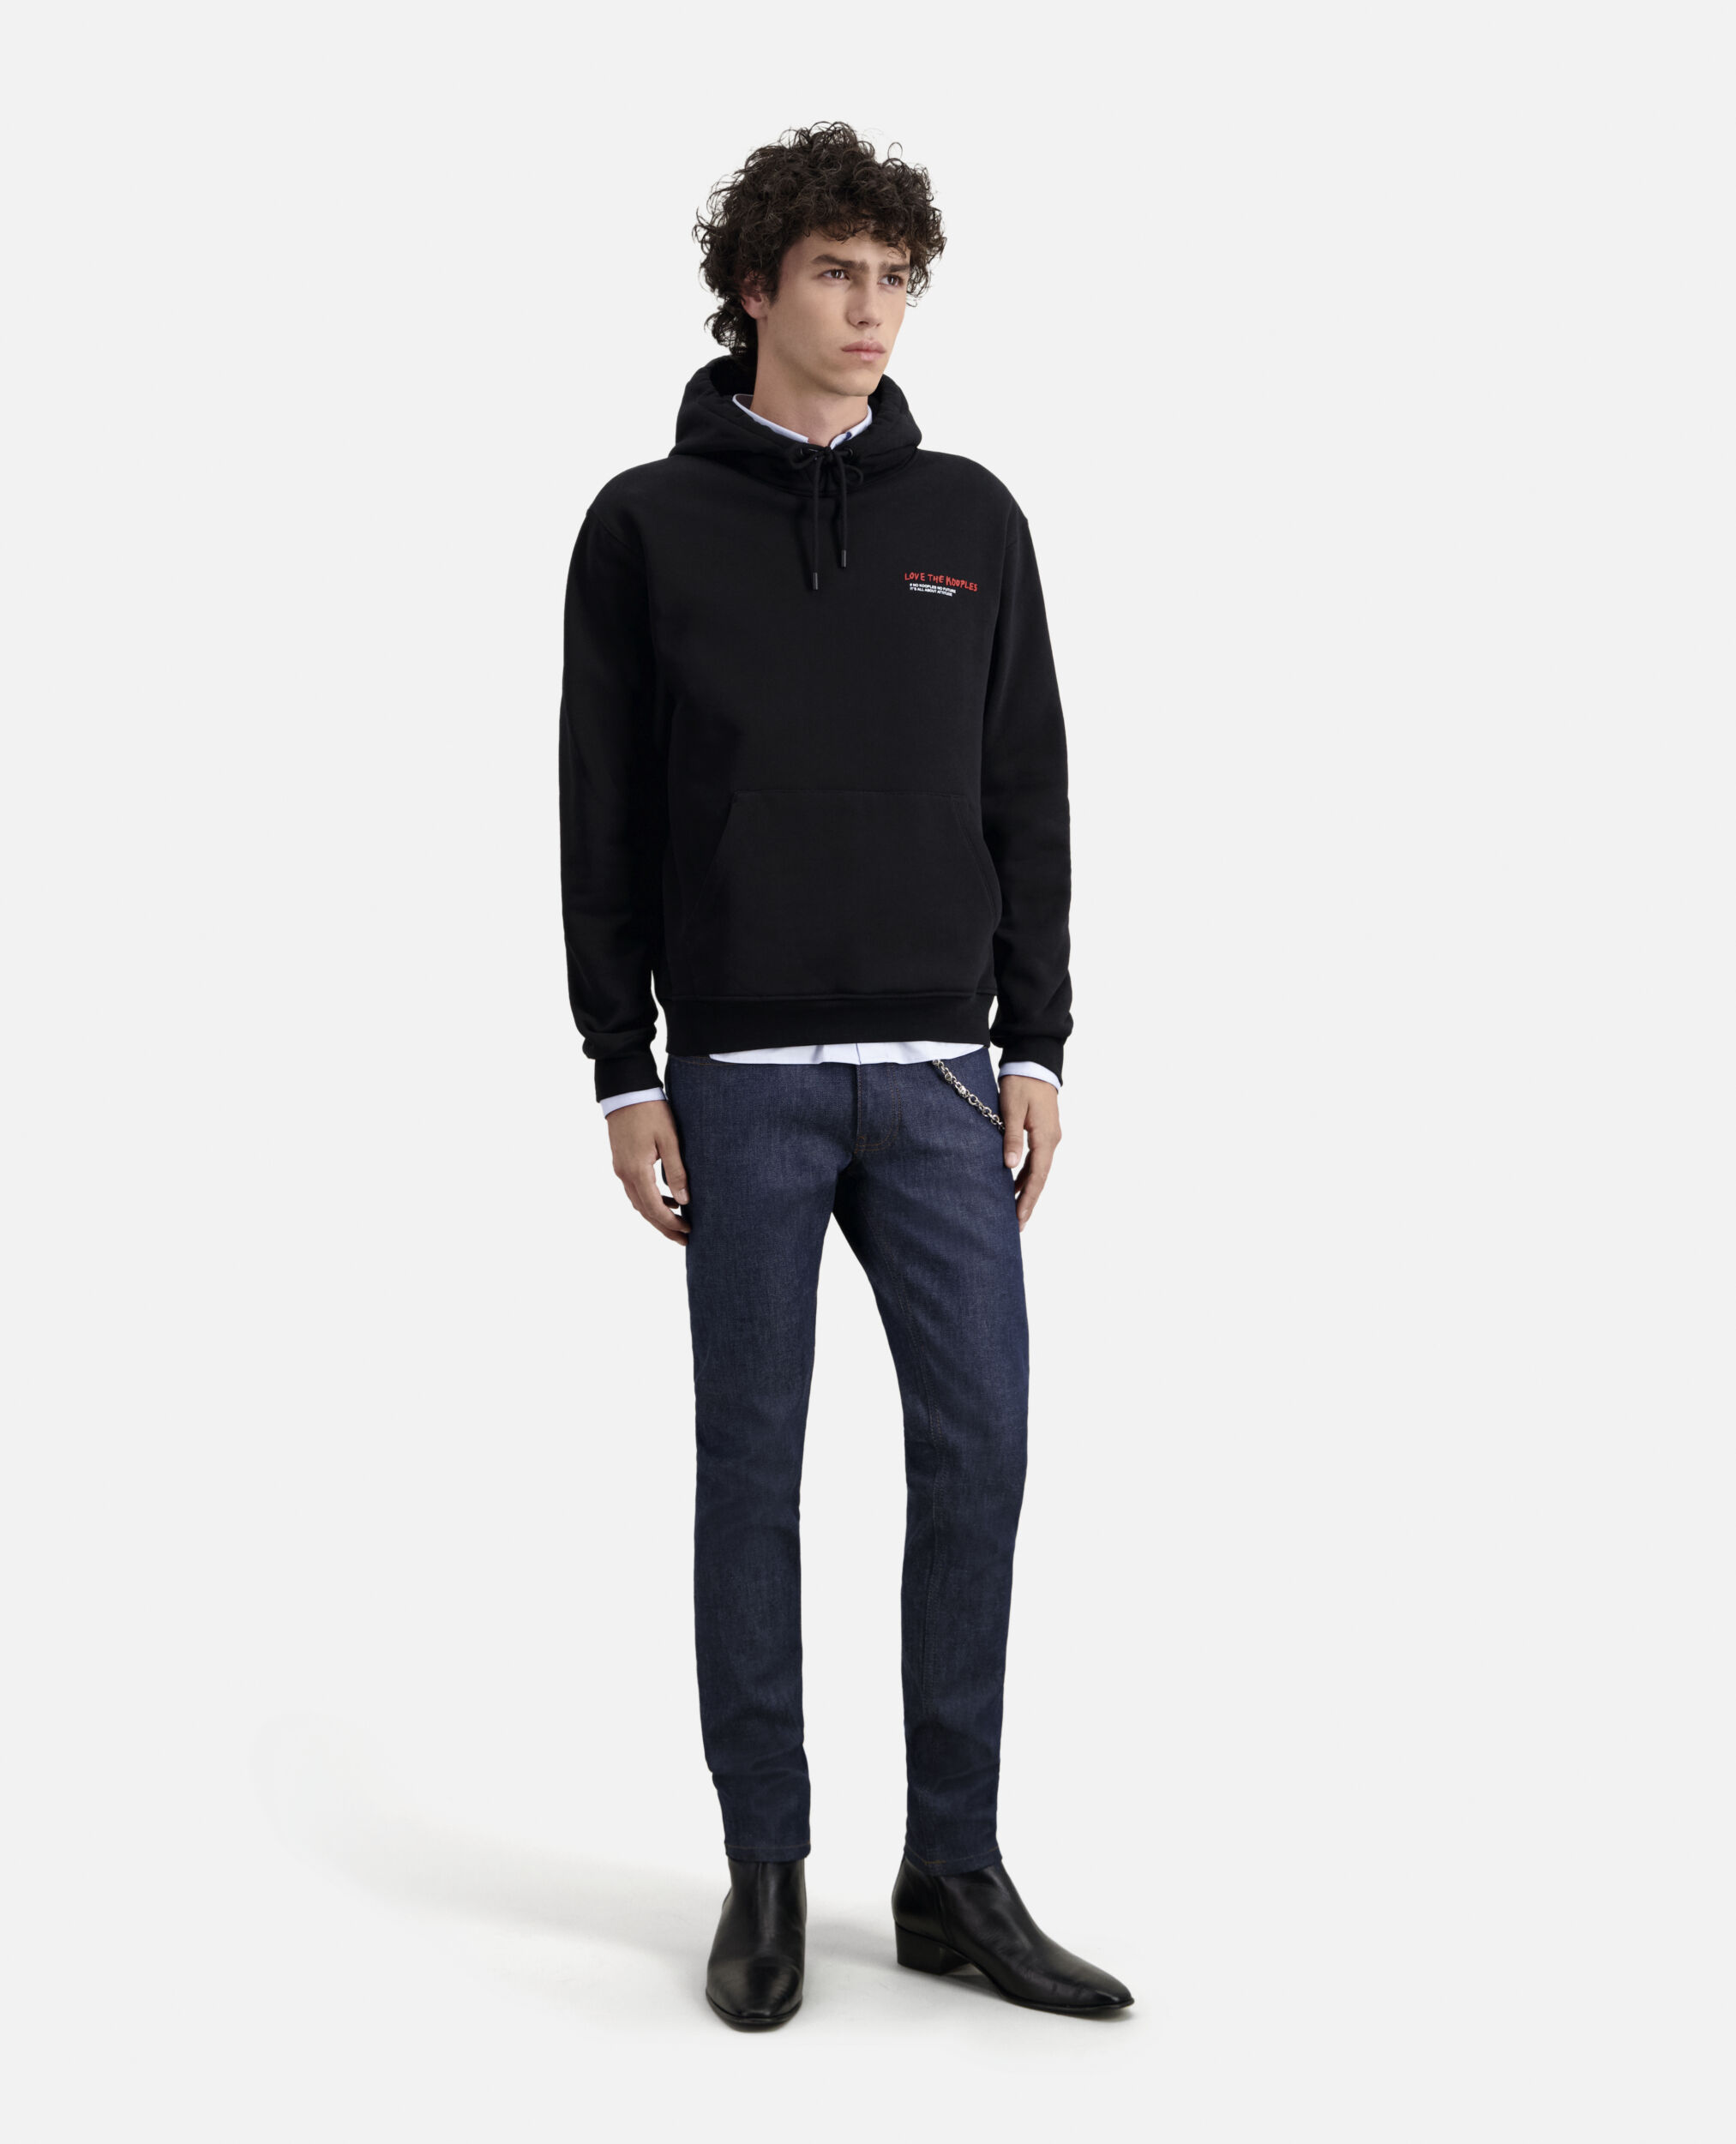 Sweatshirt Homme I Love Kooples noir, BLACK, hi-res image number null